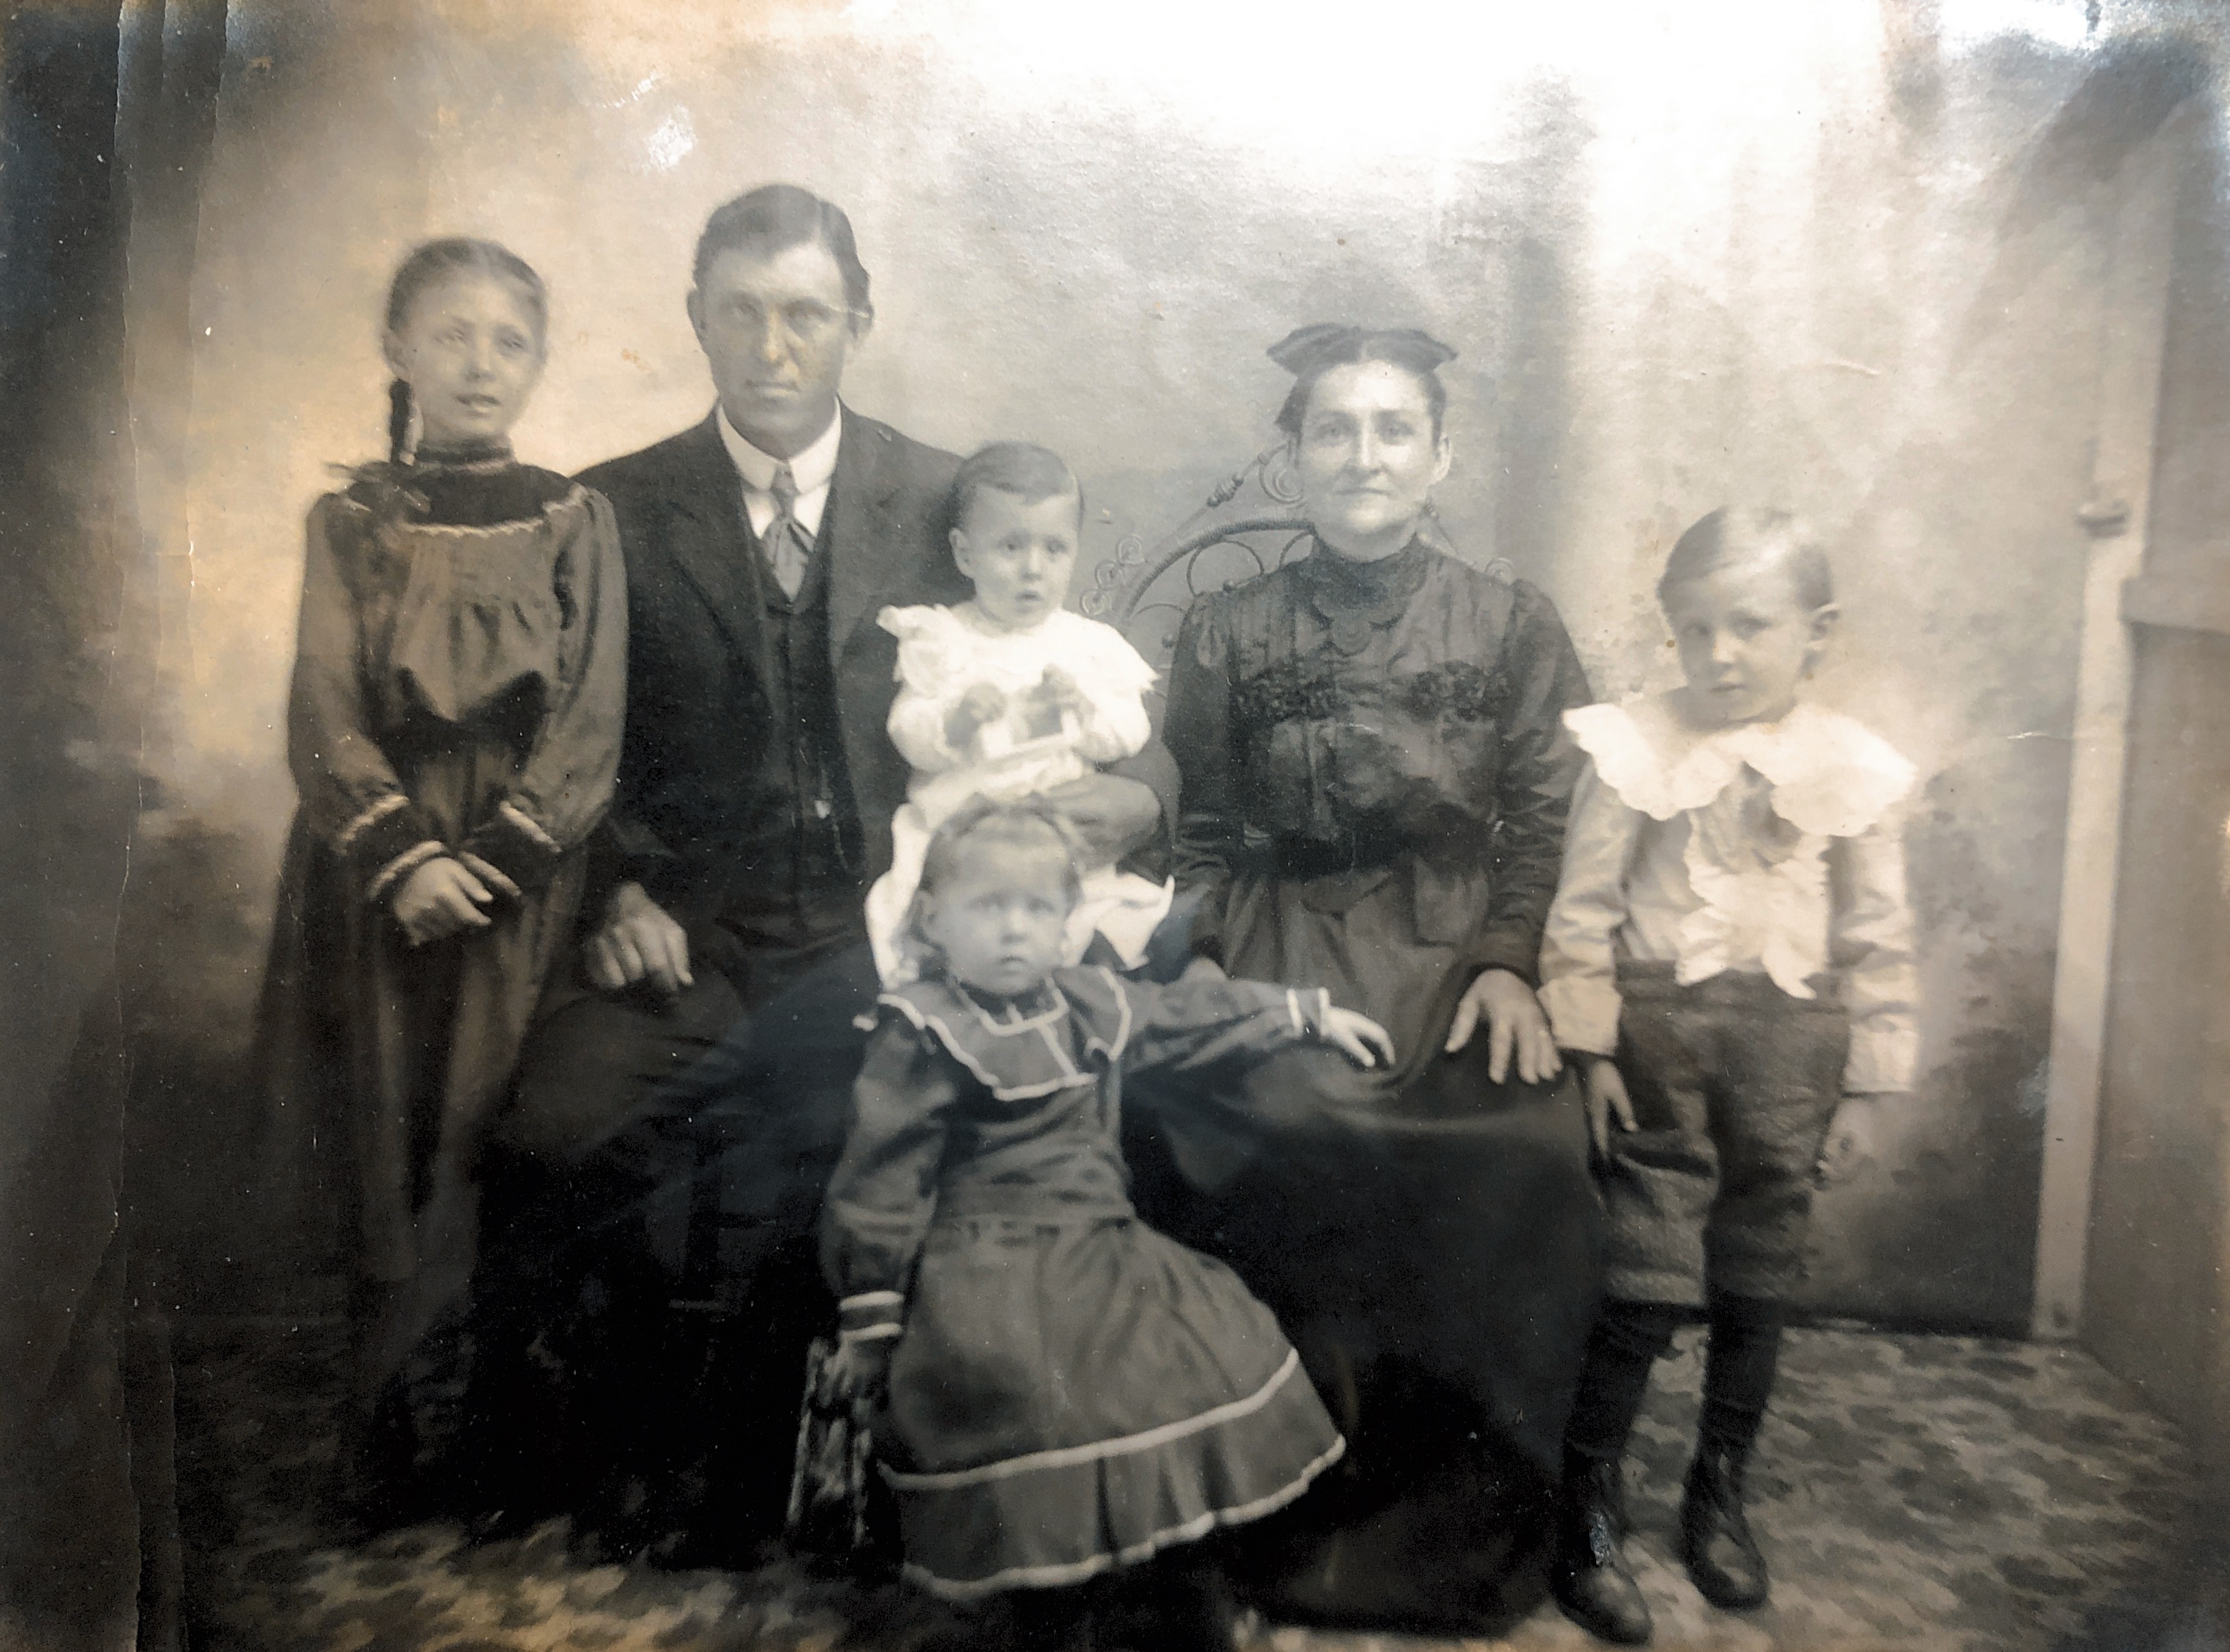 John William Bulow family, circa 1912